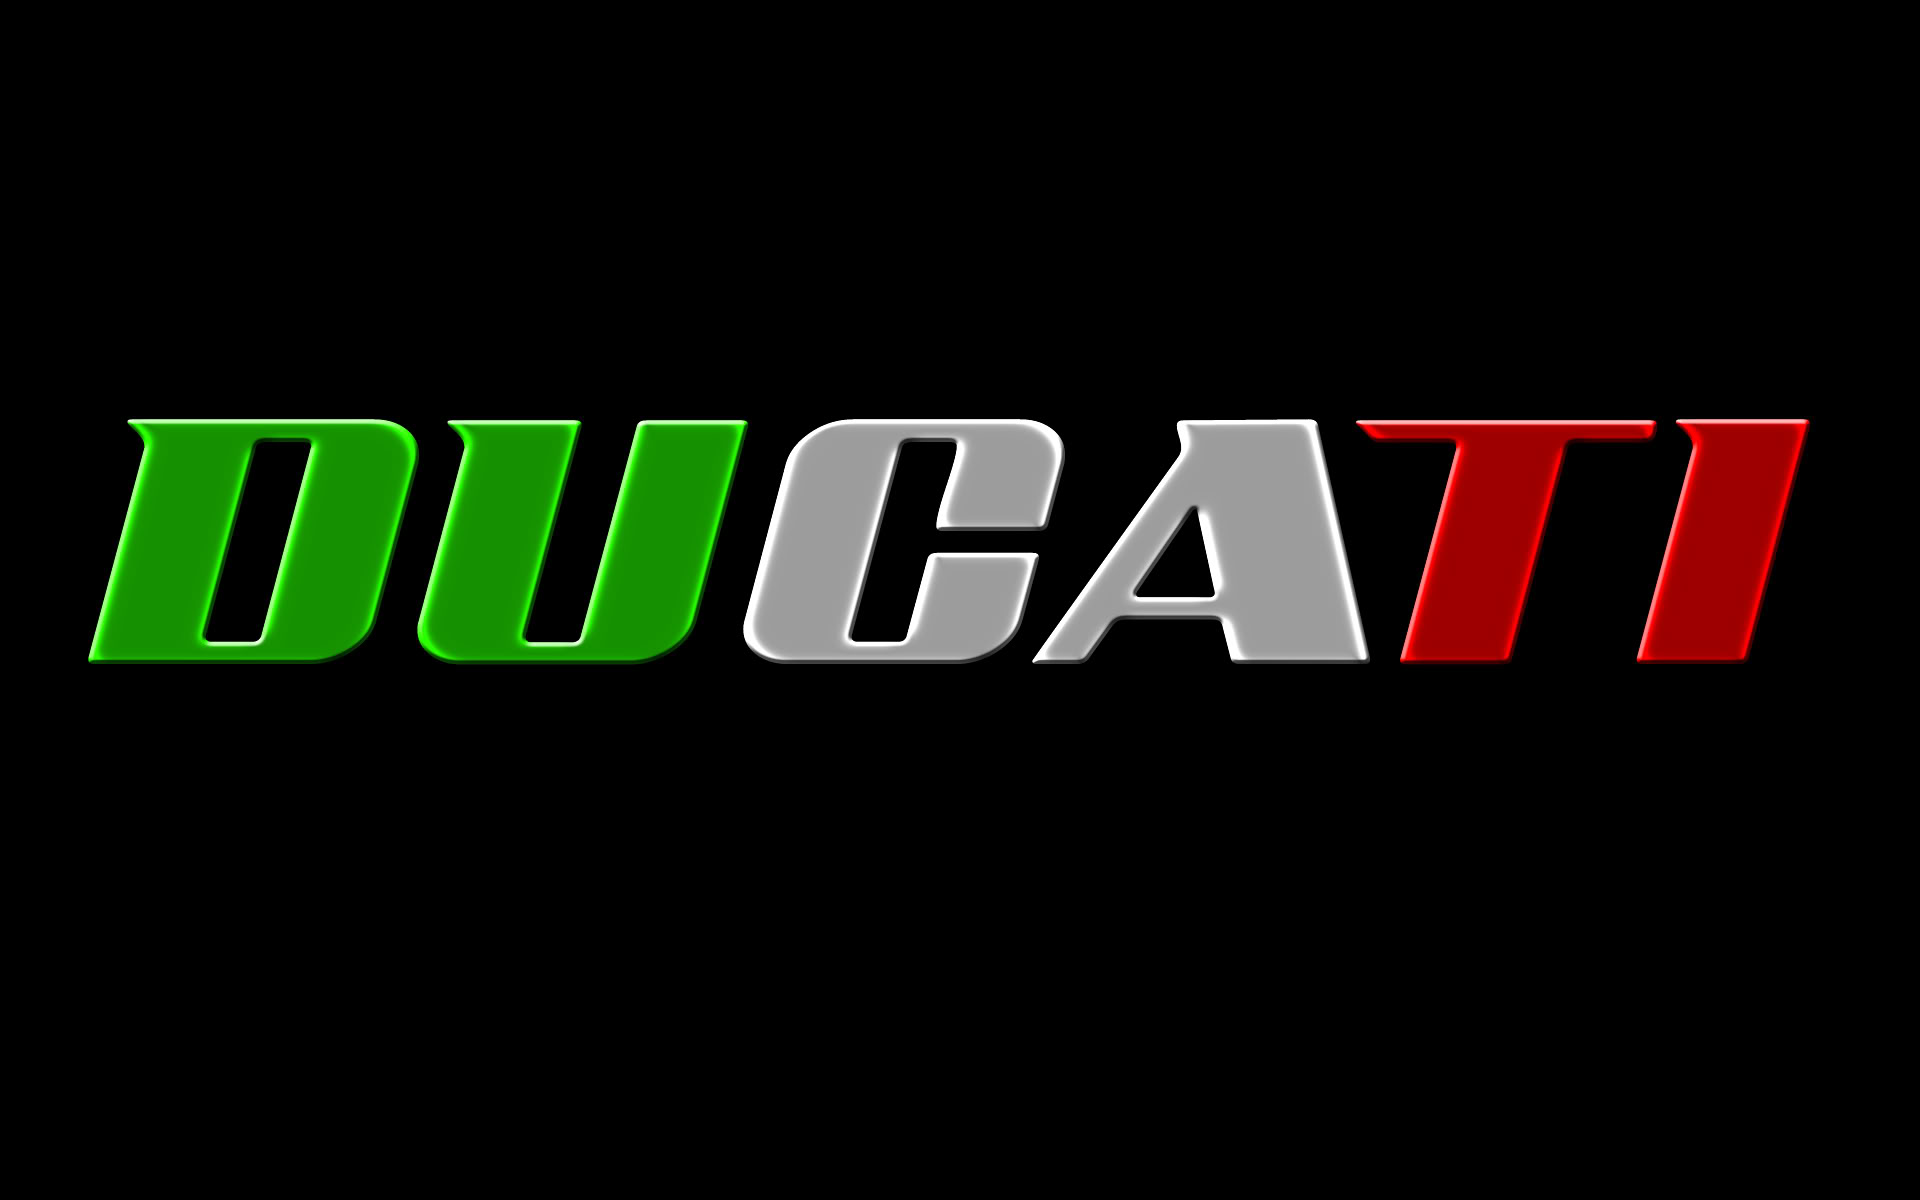 Ducati Logo Wallpaper 7350 Hd Wallpapers in Logos   Imagescicom 1920x1200